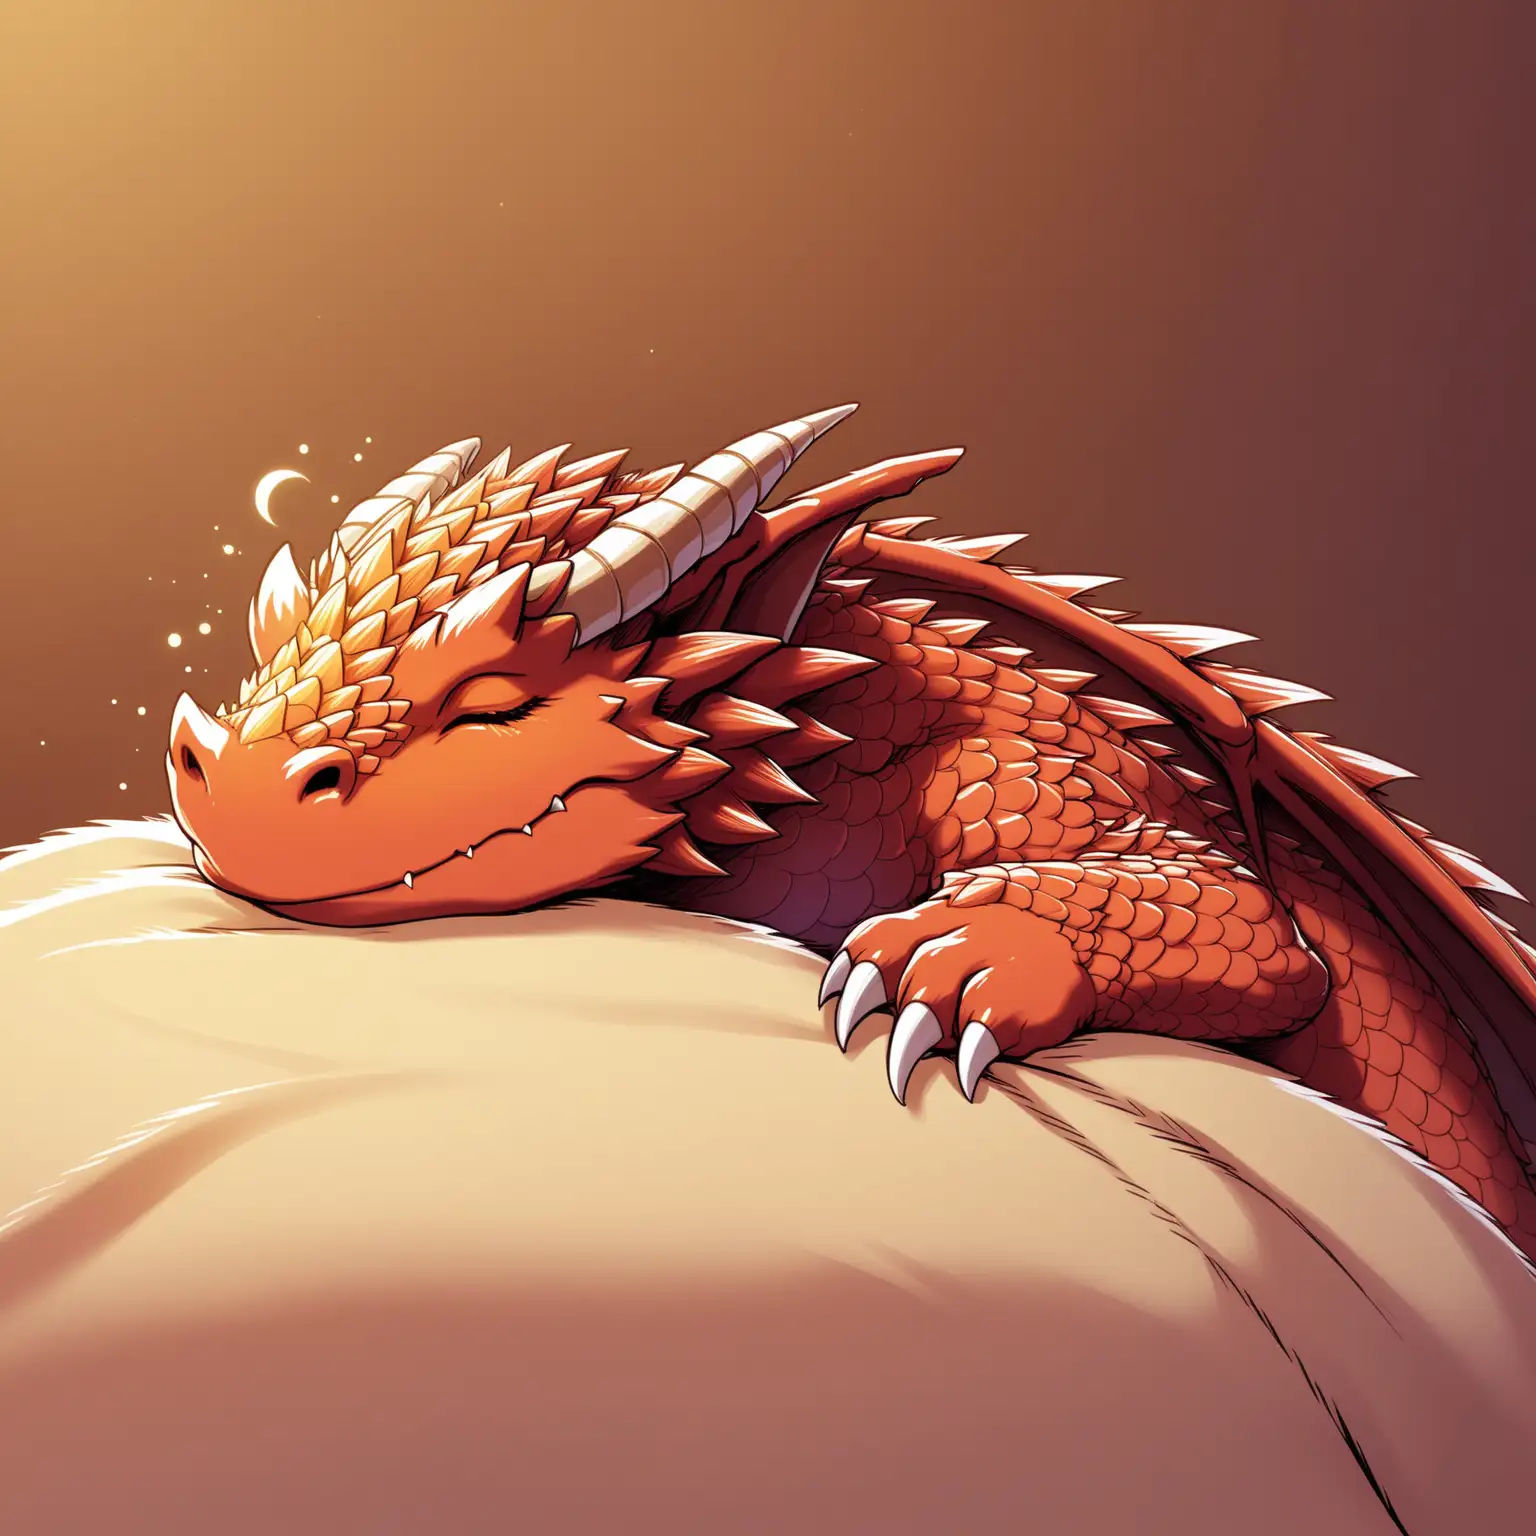 Majestic Dragon in Slumber Fantasy Art of a Serene DND Dragon Resting